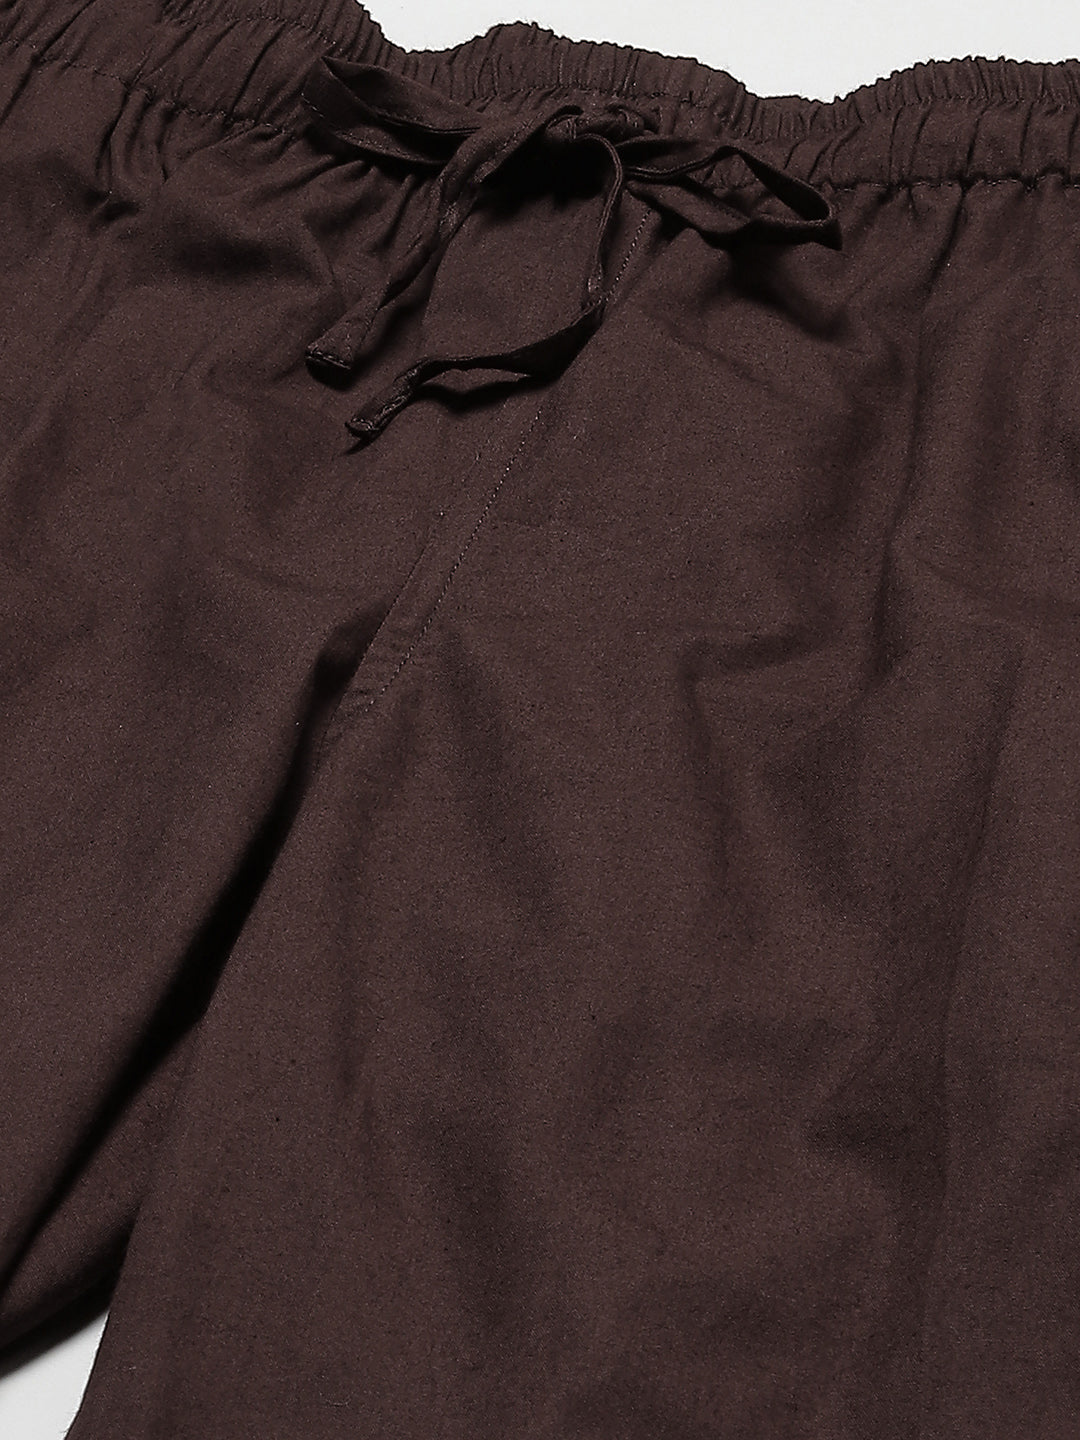 Combo Pack of 2: Deep Brown Solid Cotton Pyjamas